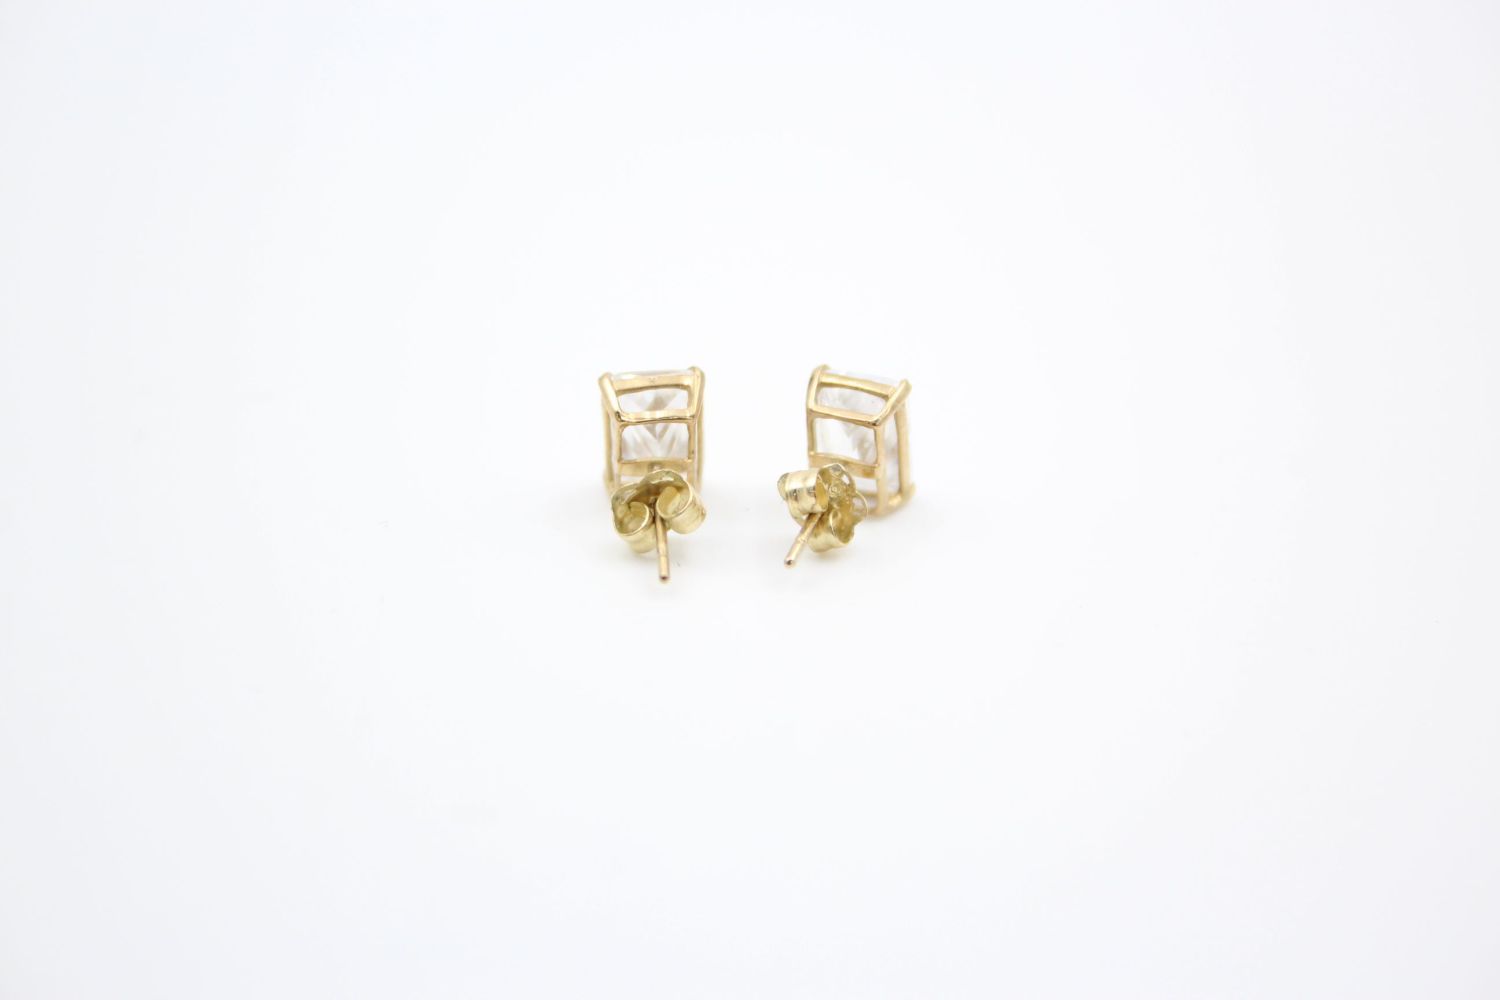 3 x 9ct gold gemstone stud earrings 2.9 grams gross - Image 4 of 11